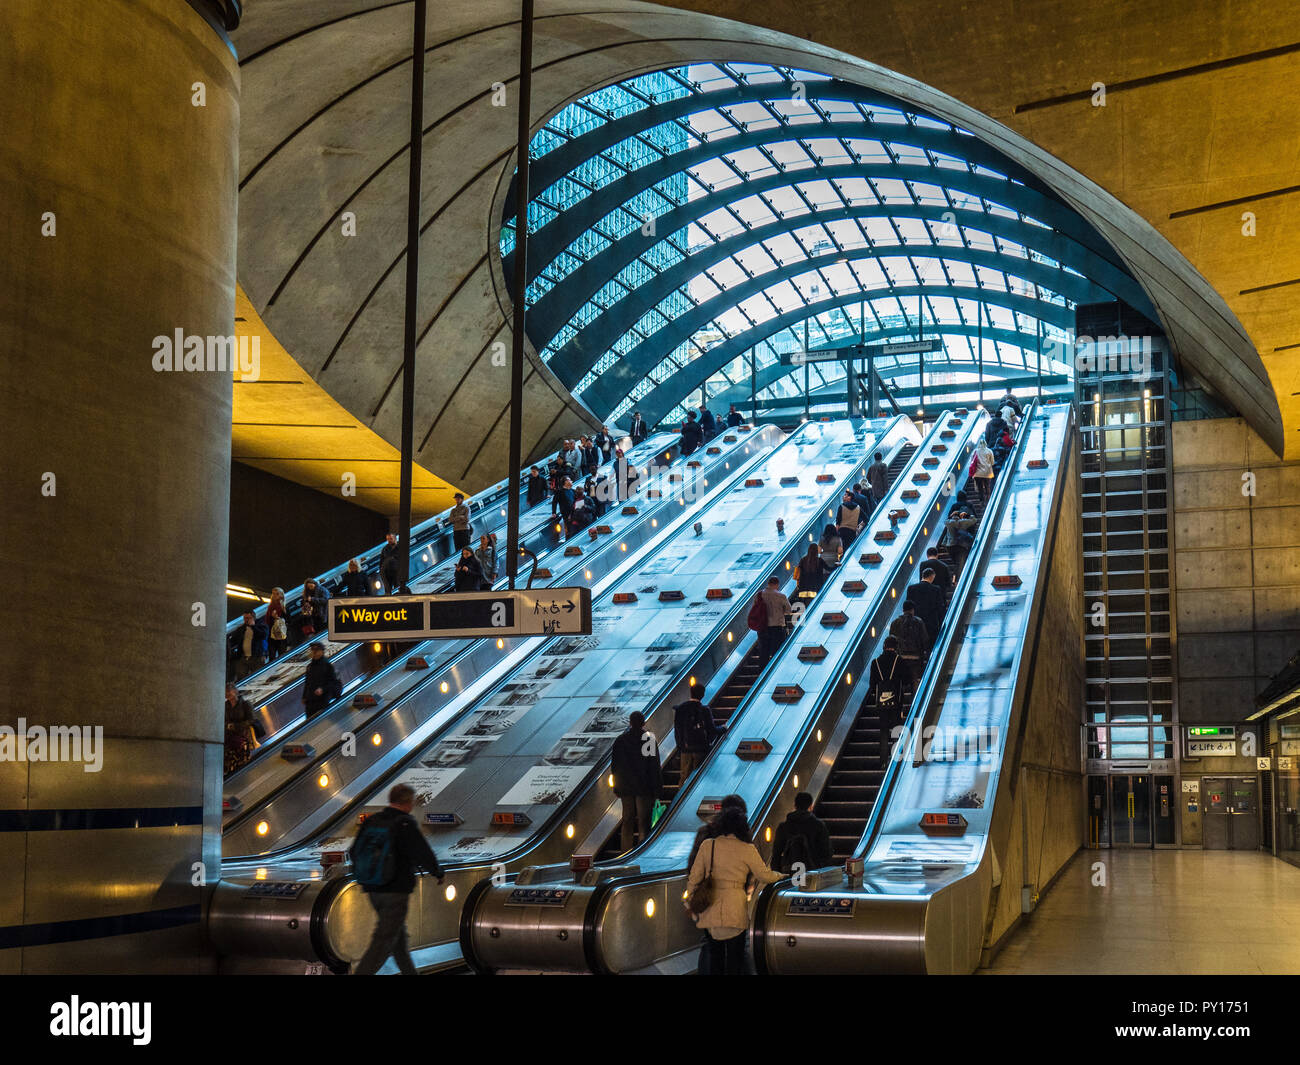 Die U-Bahnstation Canary Wharf London - die U-Bahnstation Canary Wharf auf der Jubilee Line - Architekten Sir Norman Foster eröffnete 1999 Stockfoto